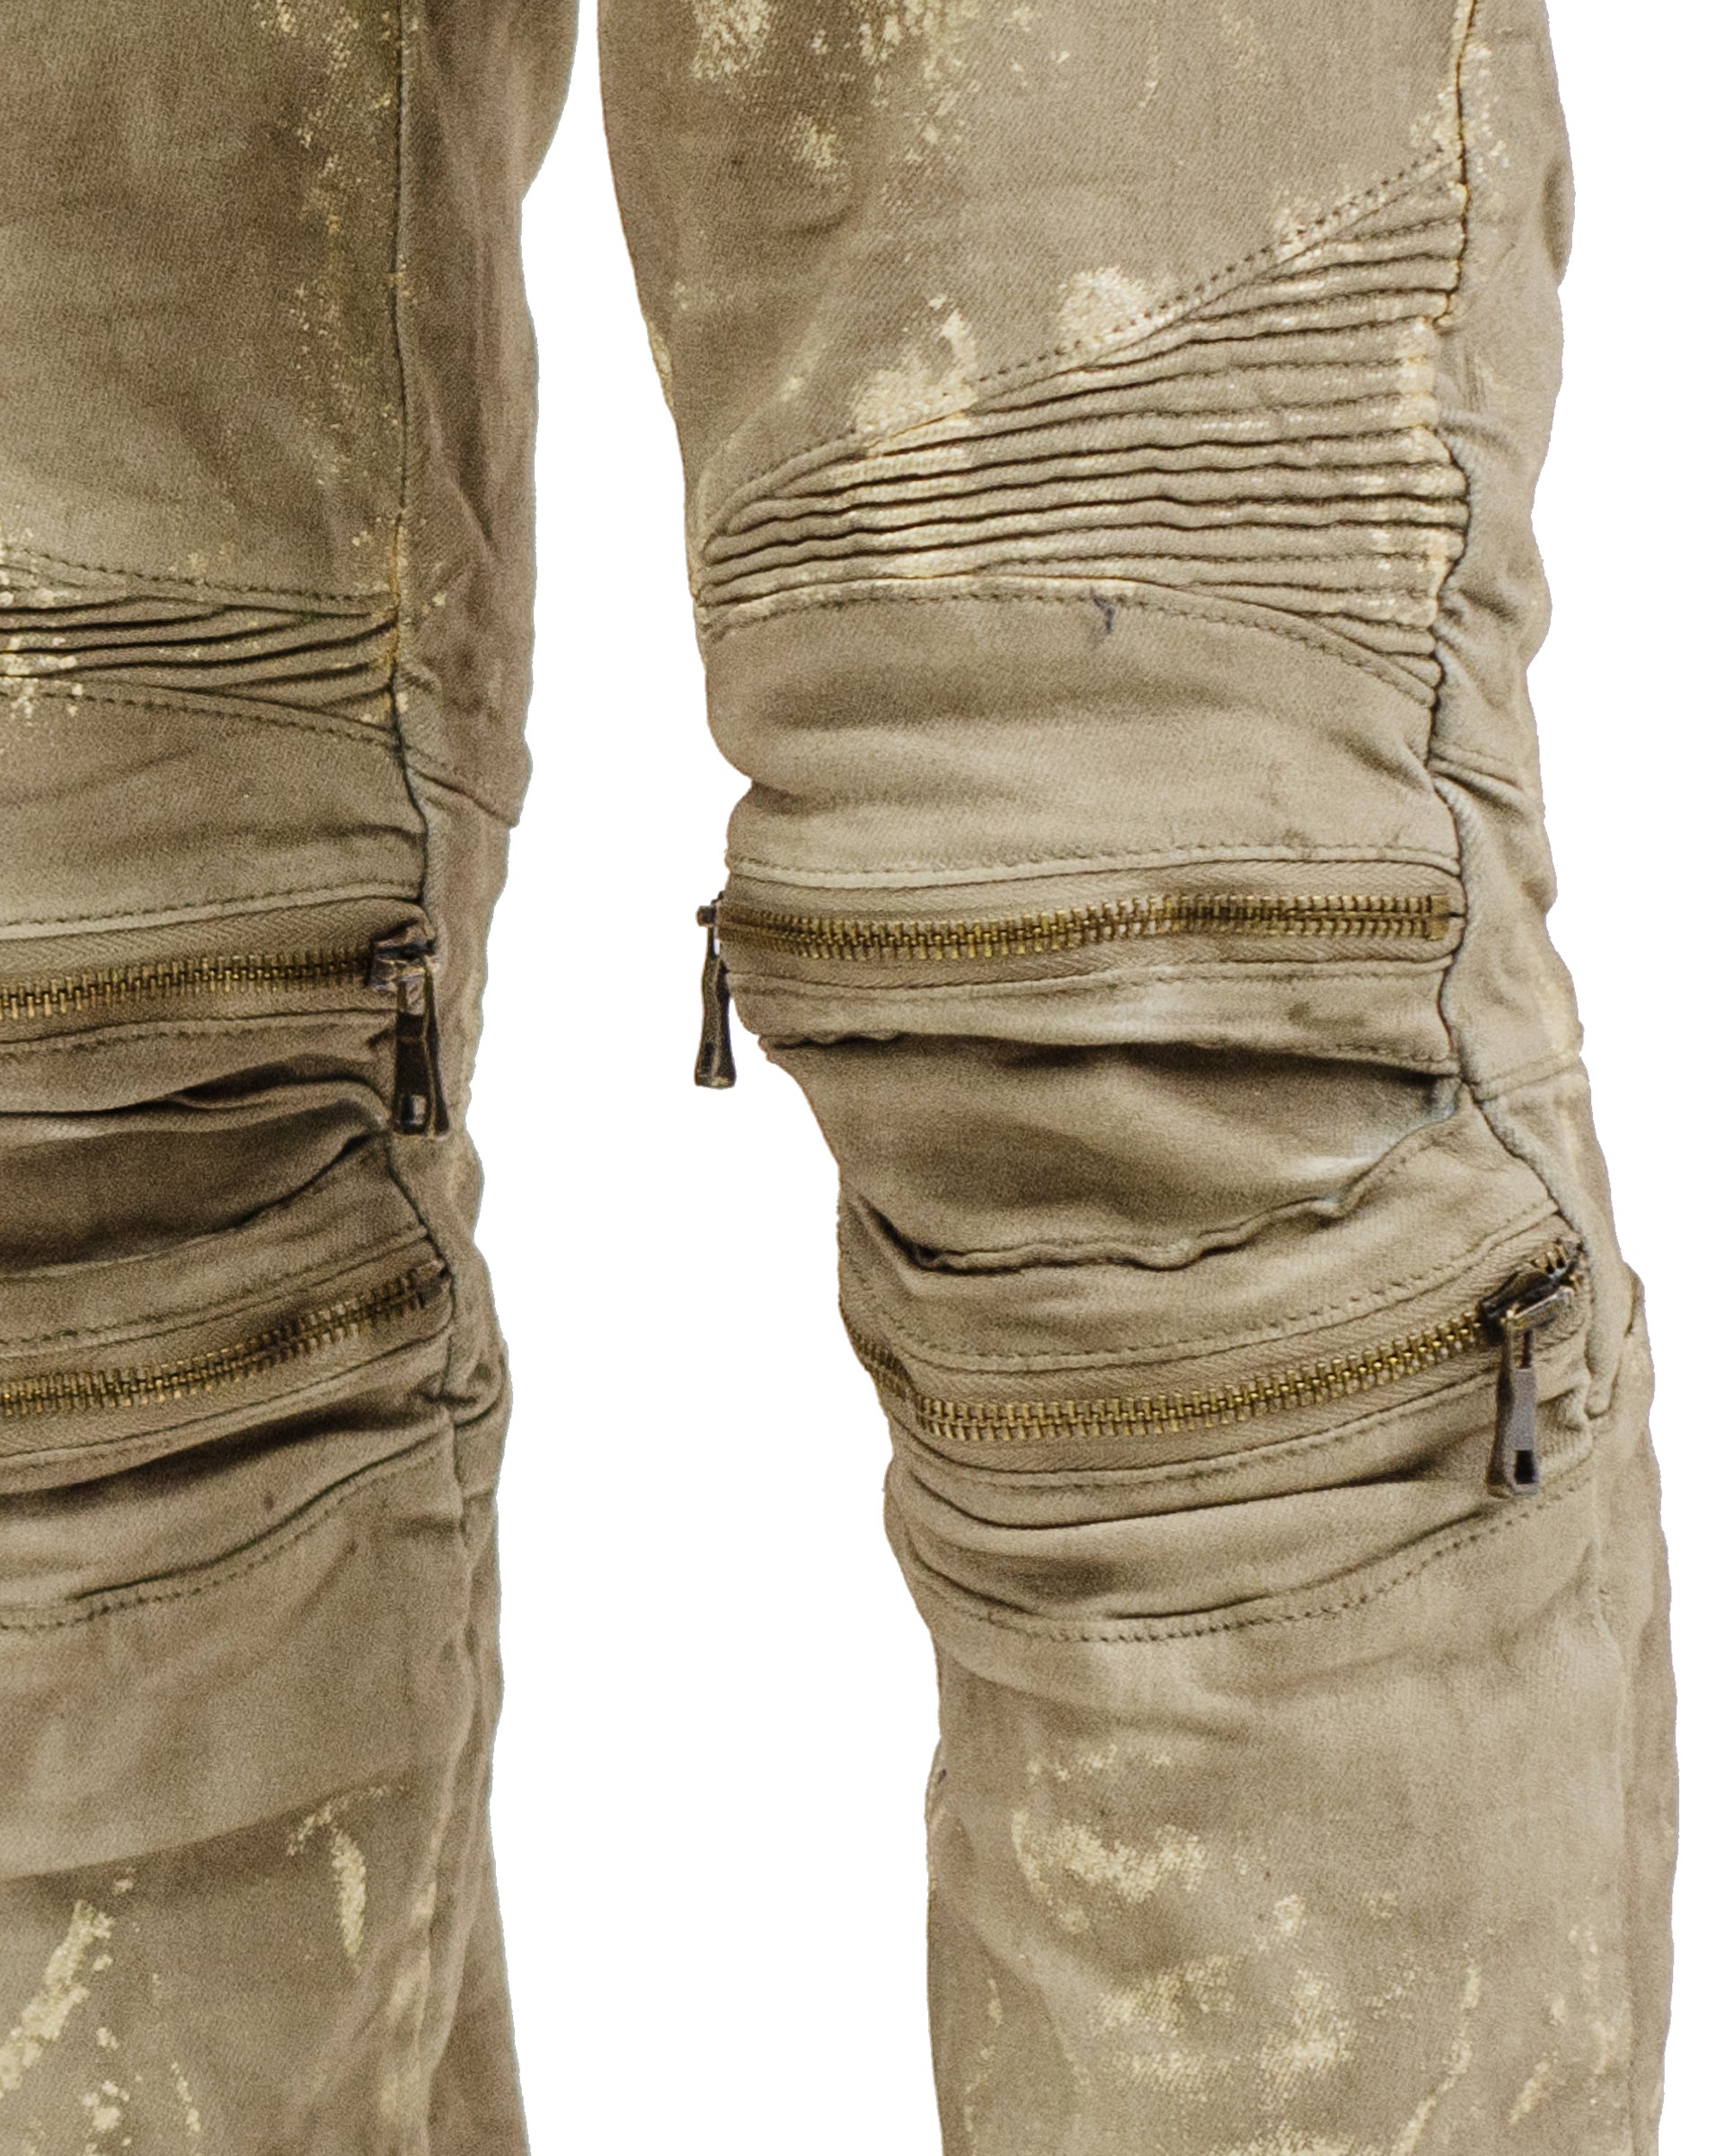 CICERO | Distressed Paint Splatter Zip Knee Slim Fit Urban Moto Denim Jeans in Hazelnut